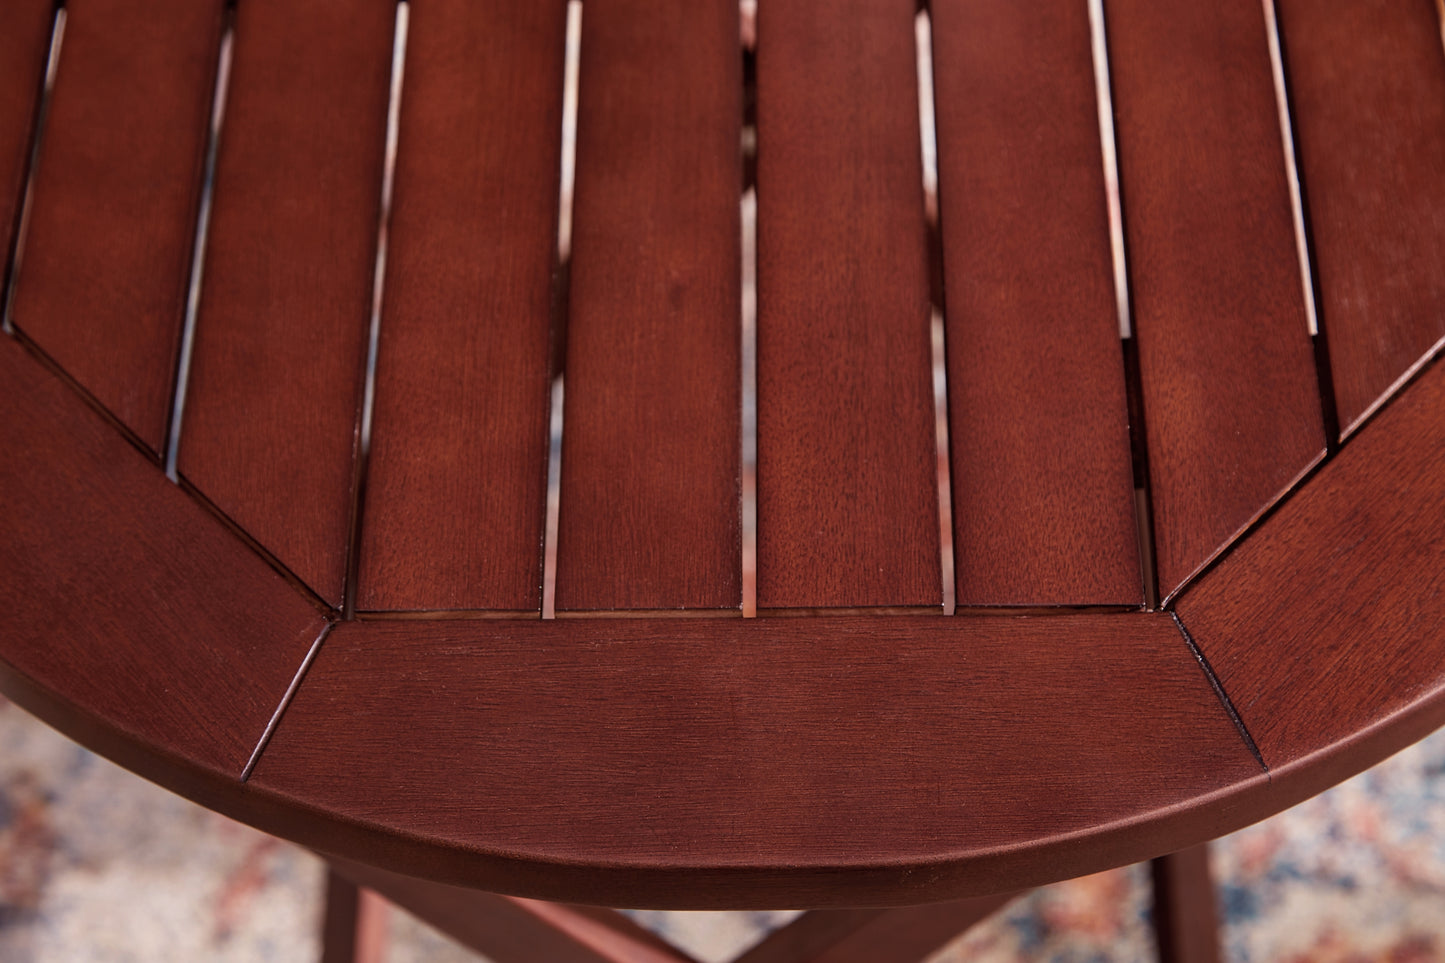 Safari Peak Chairs w/Table Set (3/CN) Signature Design by Ashley®